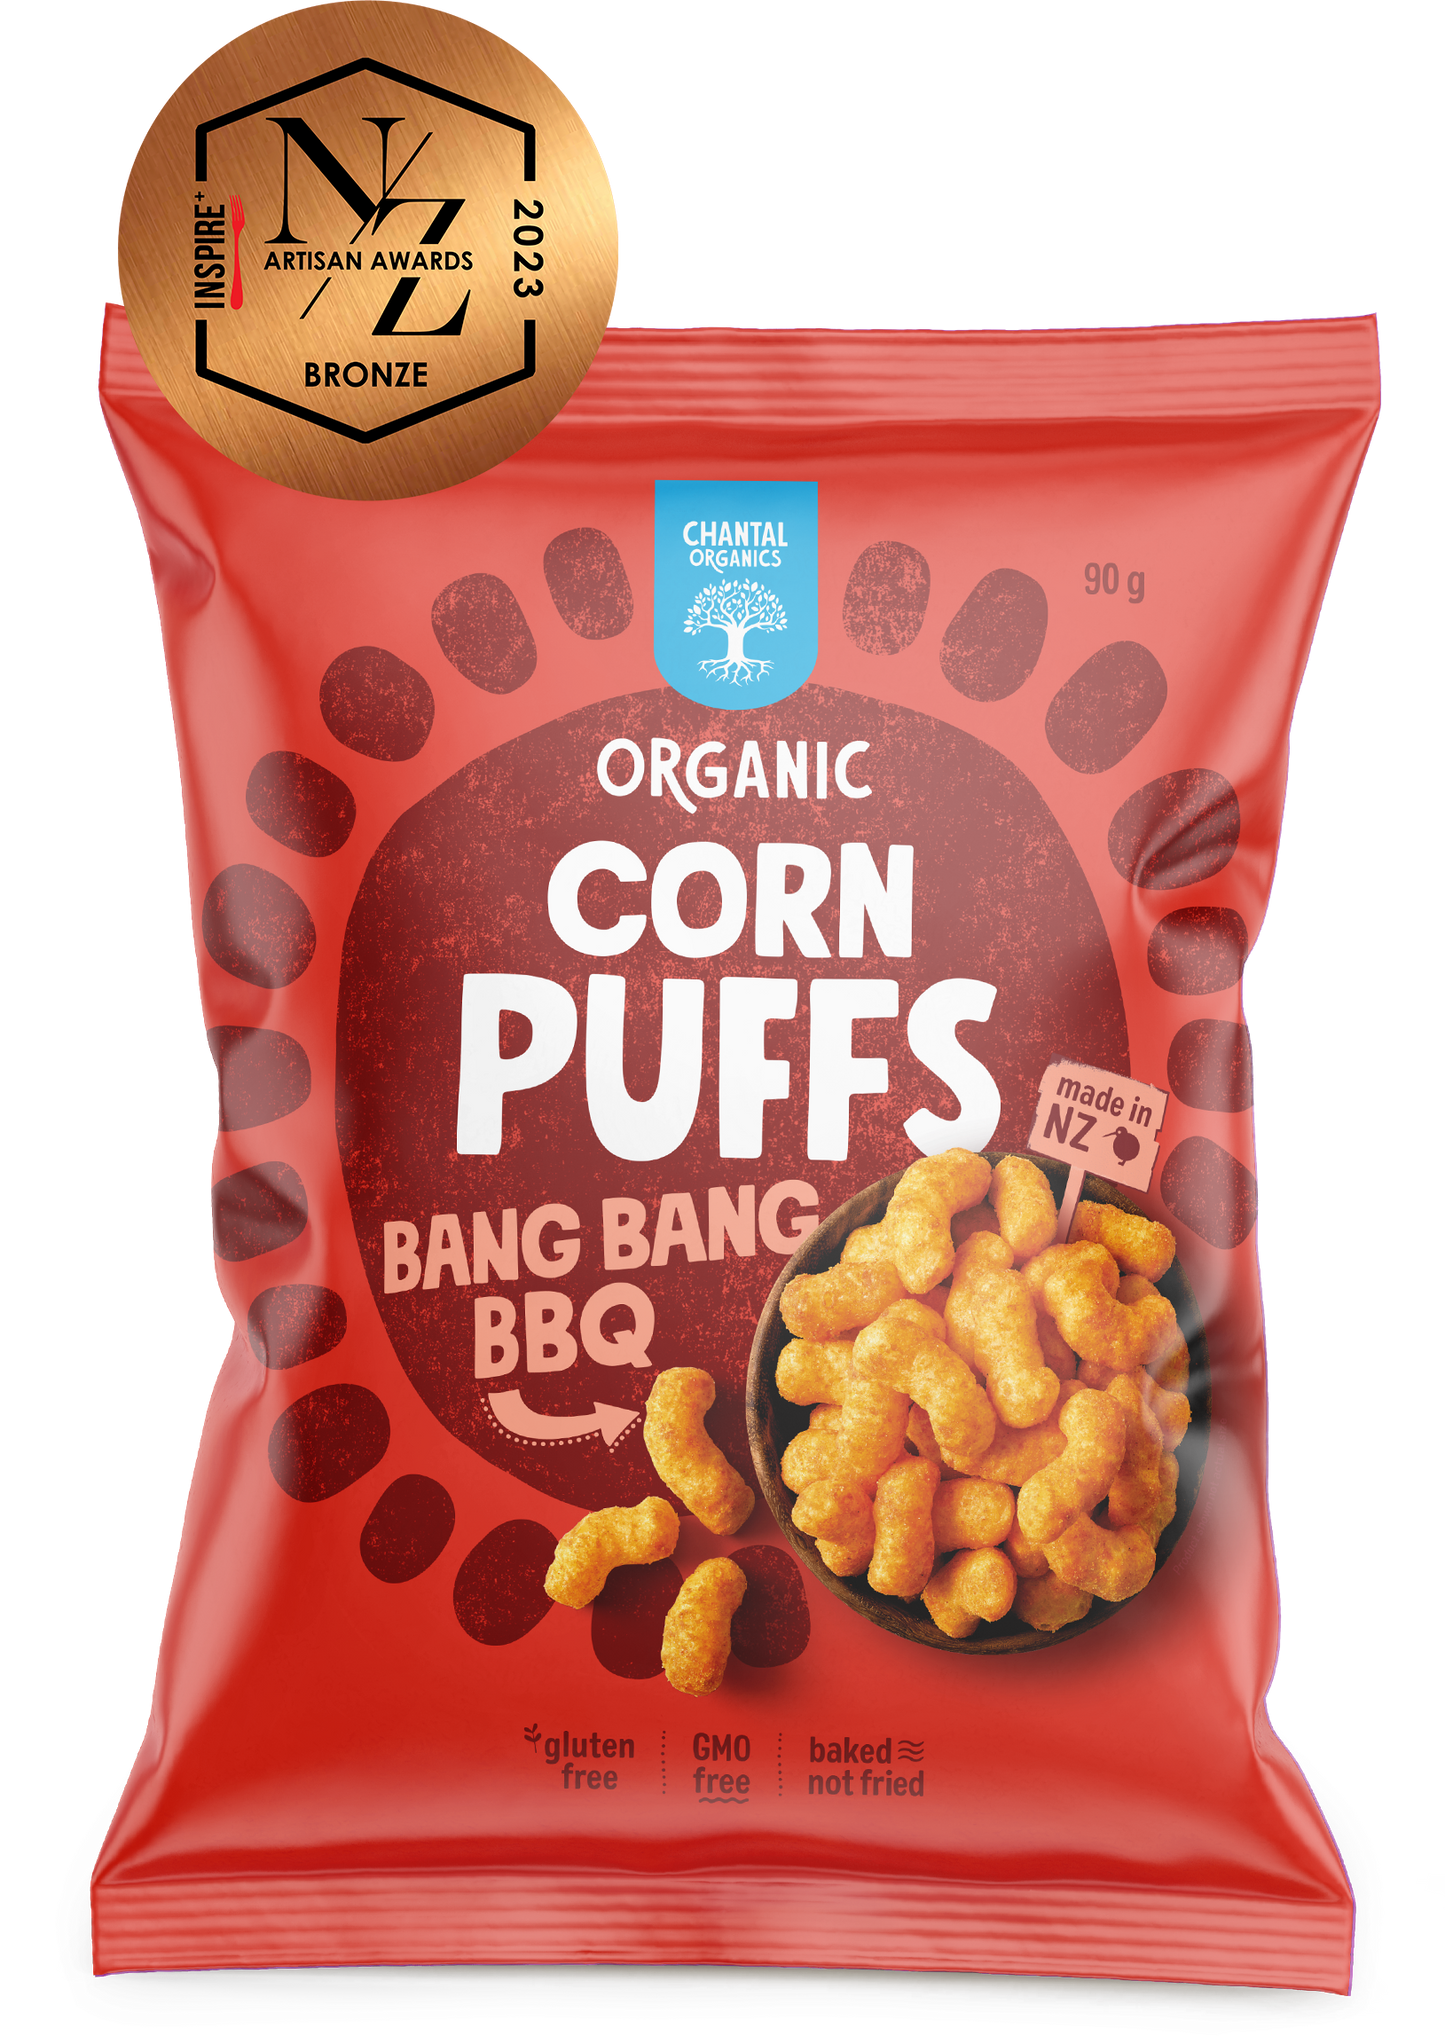 Chantal Organics Corn Puffs 90g, Bang Bang BBQ Gluten-Free